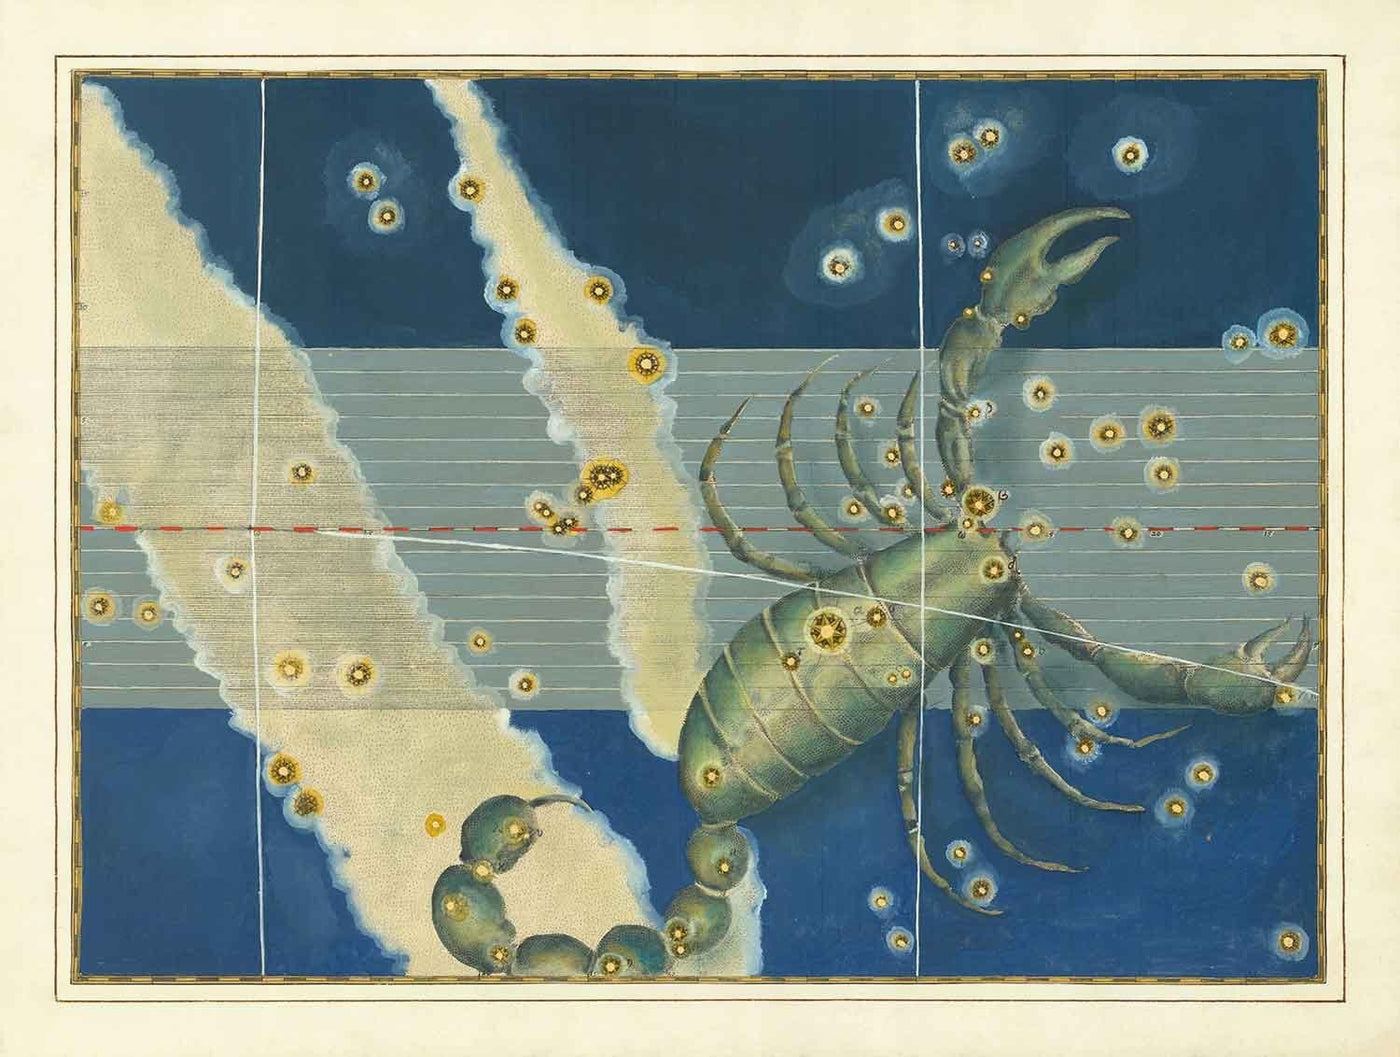 Old Star Map of Scorpio, 1603 par Johann Bayer - Zodiac Astrology Chart - The Scorpion Horoscope Sign